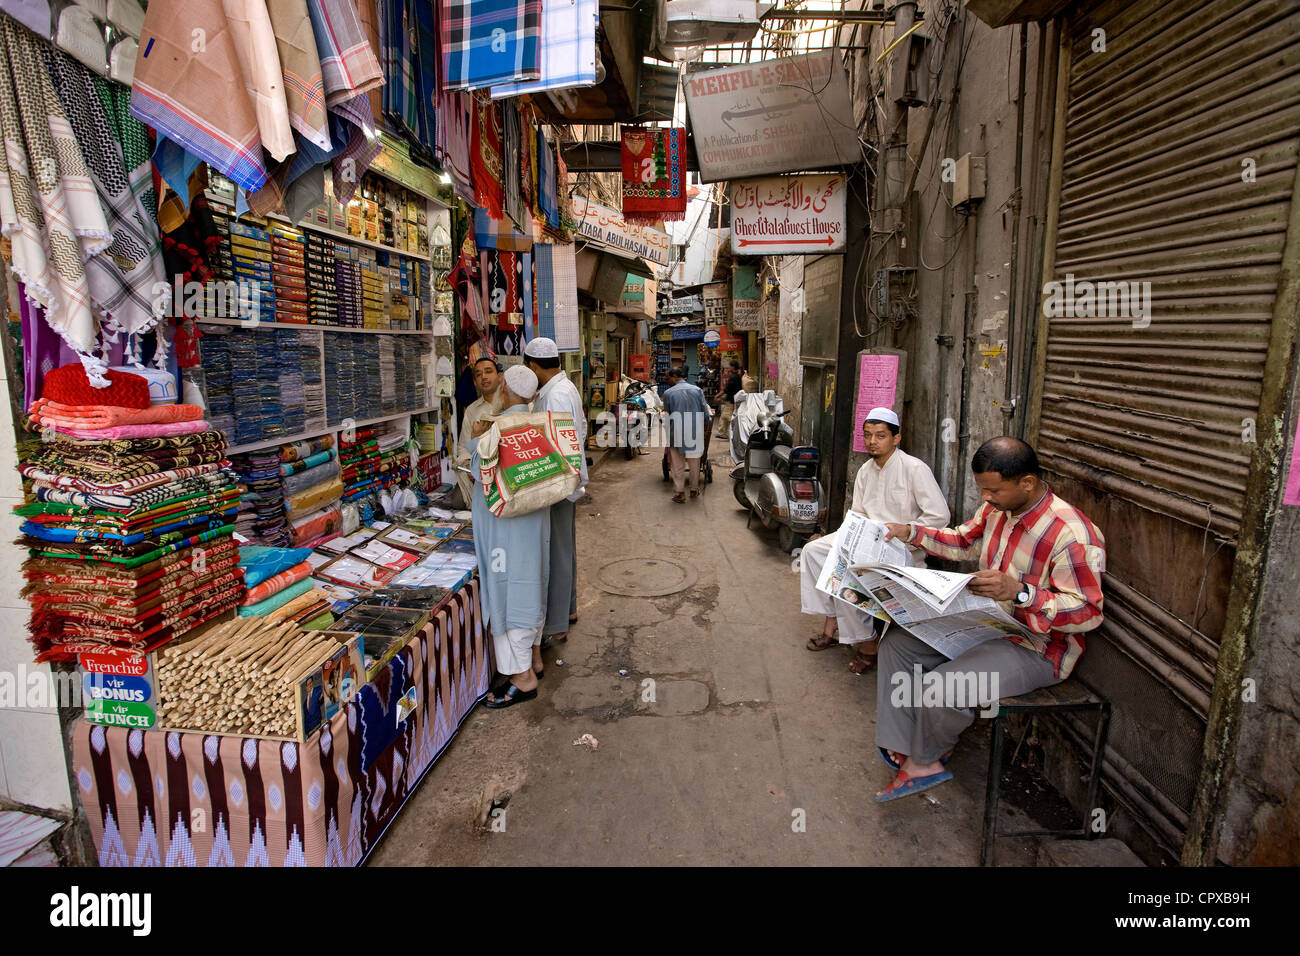 L'Inde, Delhi, quartier musulman près de la mosquée Jama Masjid, rue étroite Banque D'Images